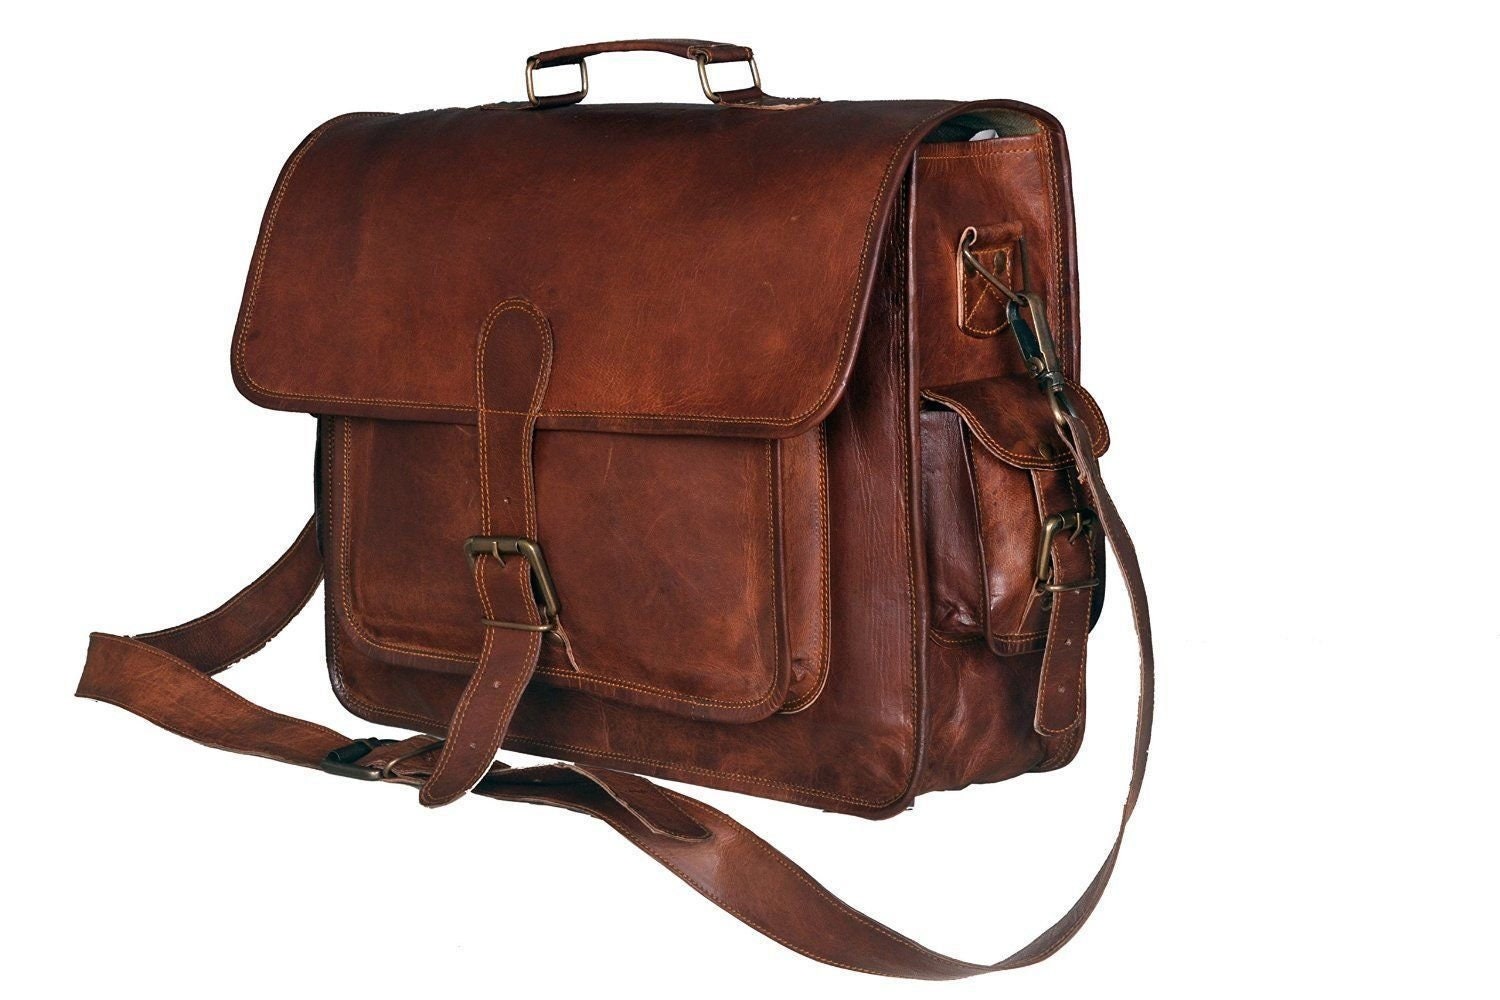 15 Inch, Brown Leather Laptop Bag for Men Women Full Grain Leather Messenger Satchel Office Crossbody Shoulder Bag by NOORLeather's